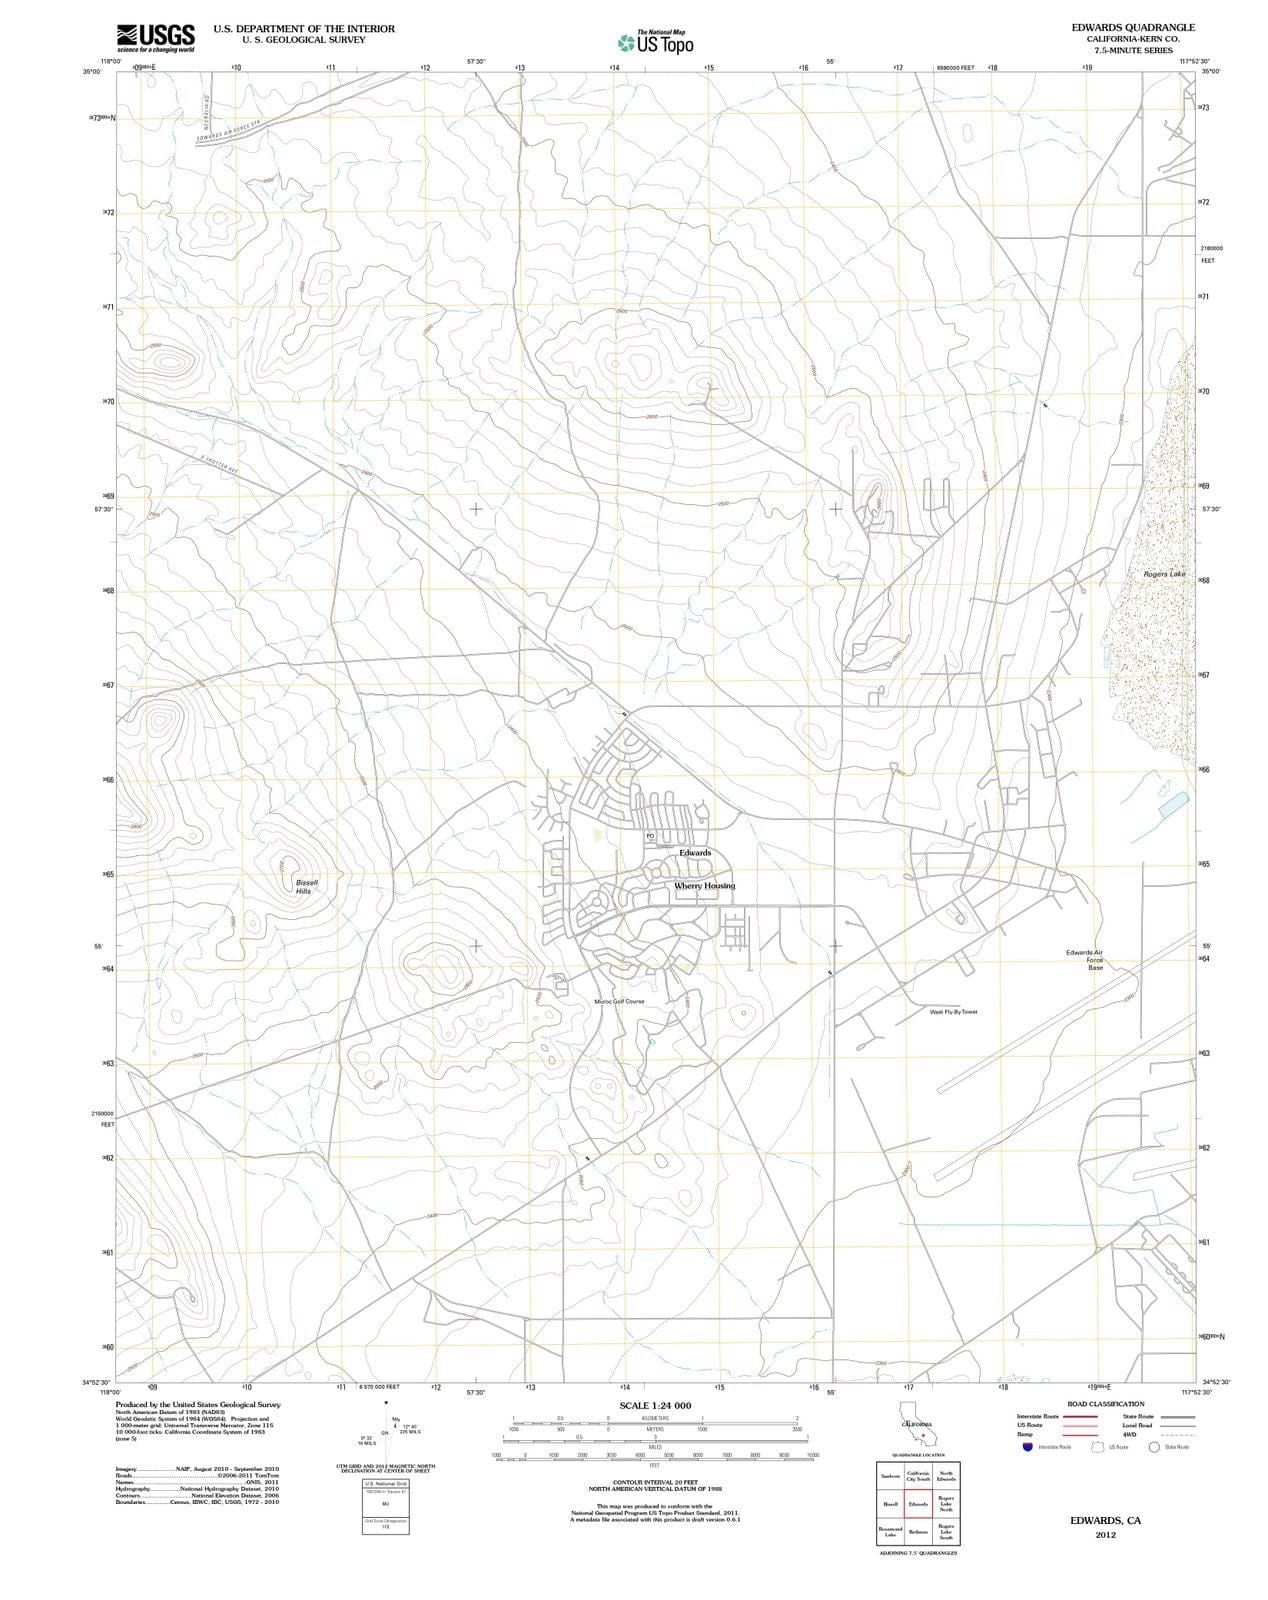 2012 Edwards, CA - California - USGS Topographic Map